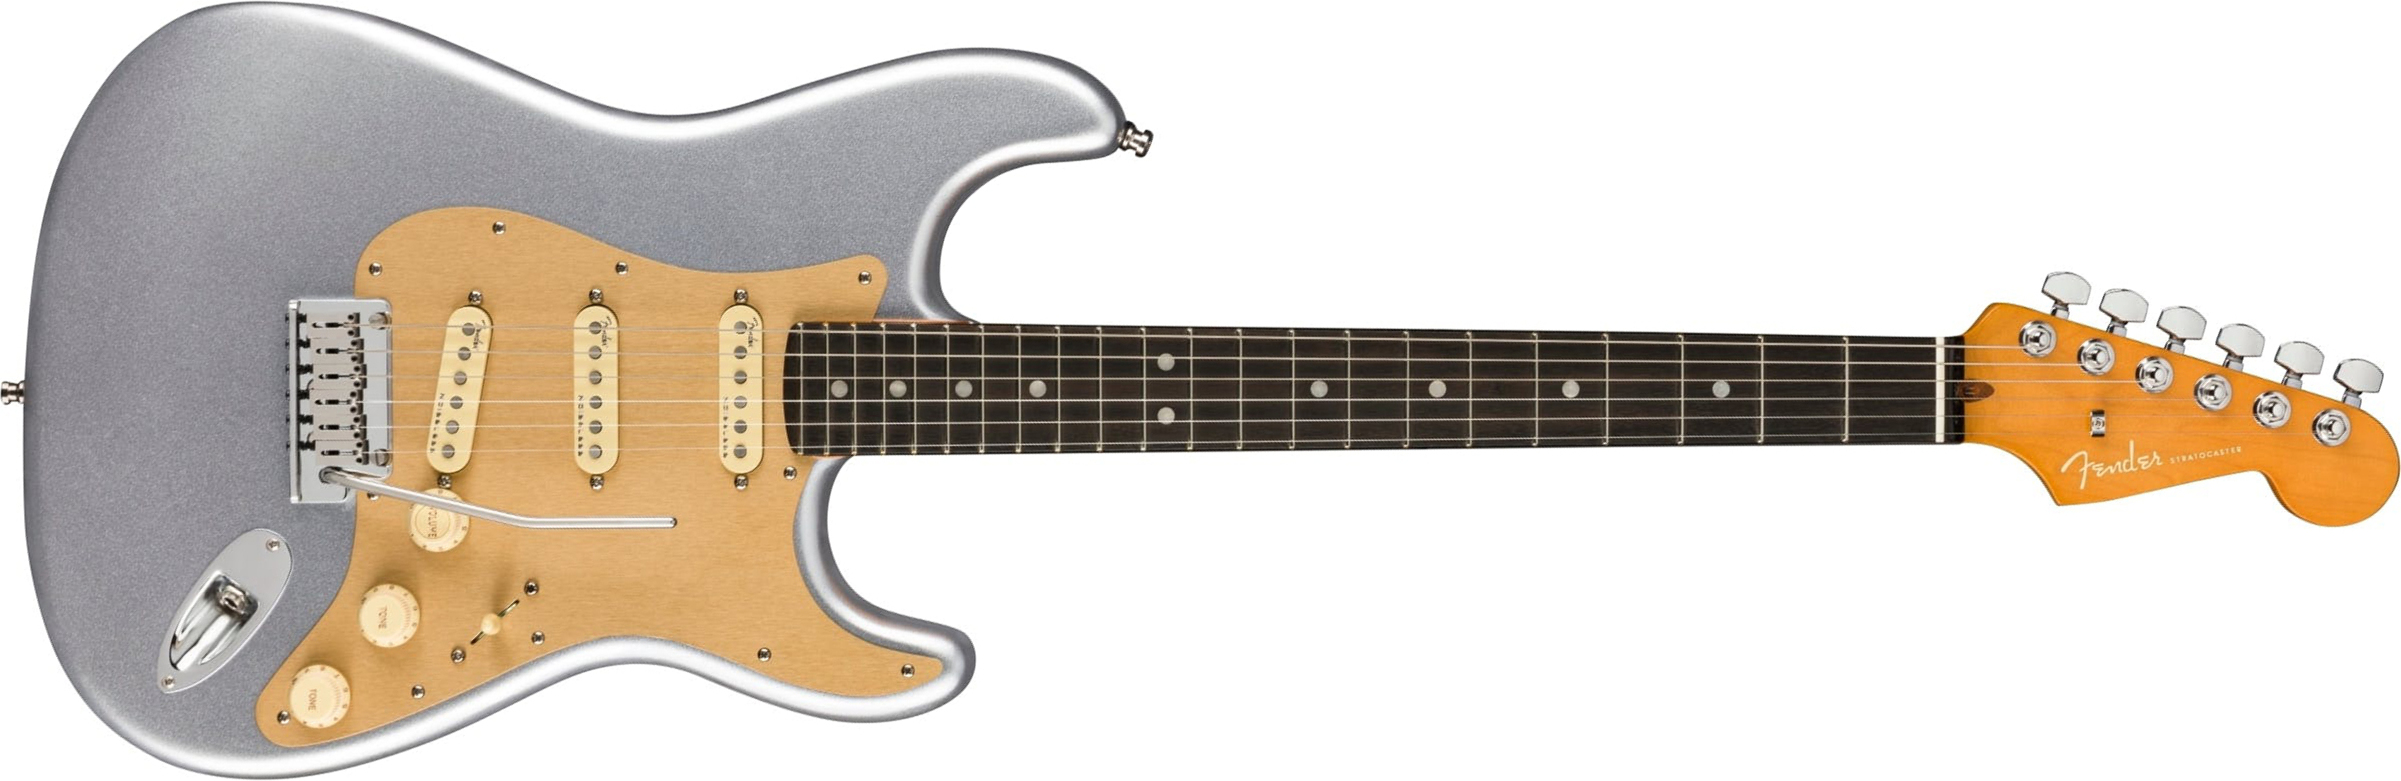 Fender Strat American Ultra Ltd Usa 3s Trem Eb - Quicksilver - Str shape electric guitar - Main picture